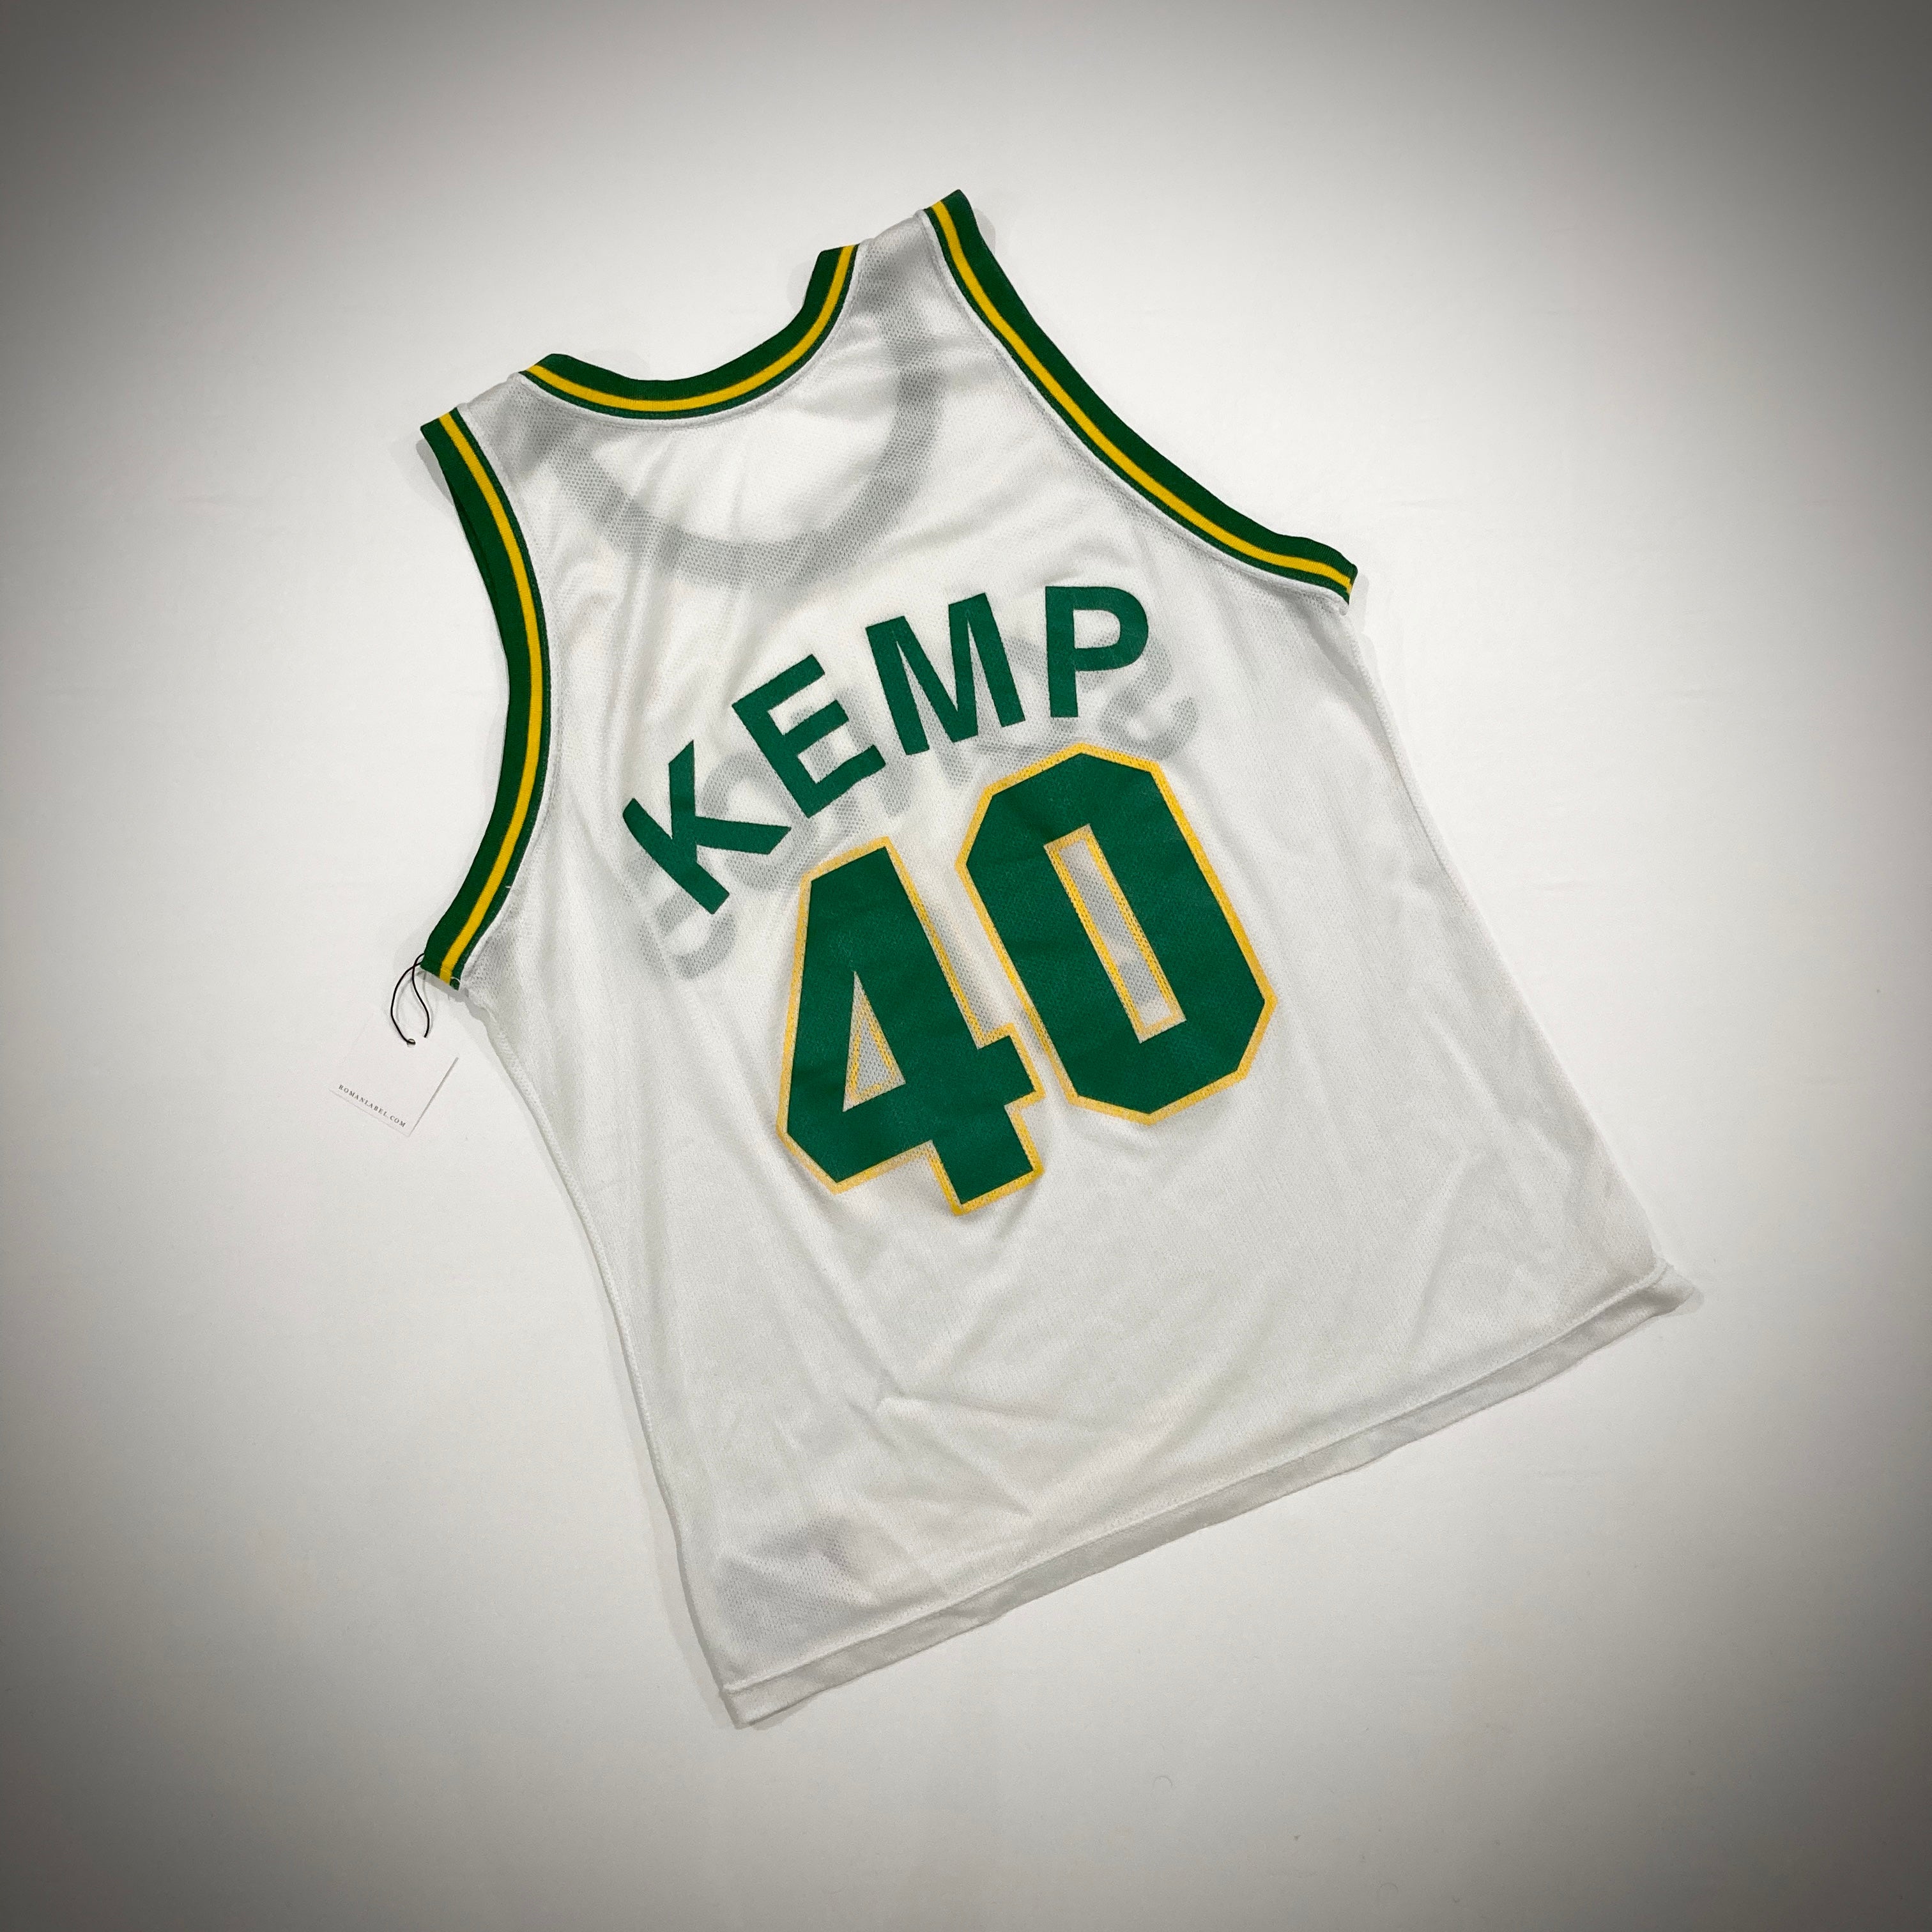 Vintage Shawn Kemp Seattle SuperSonics Jersey M – Laundry